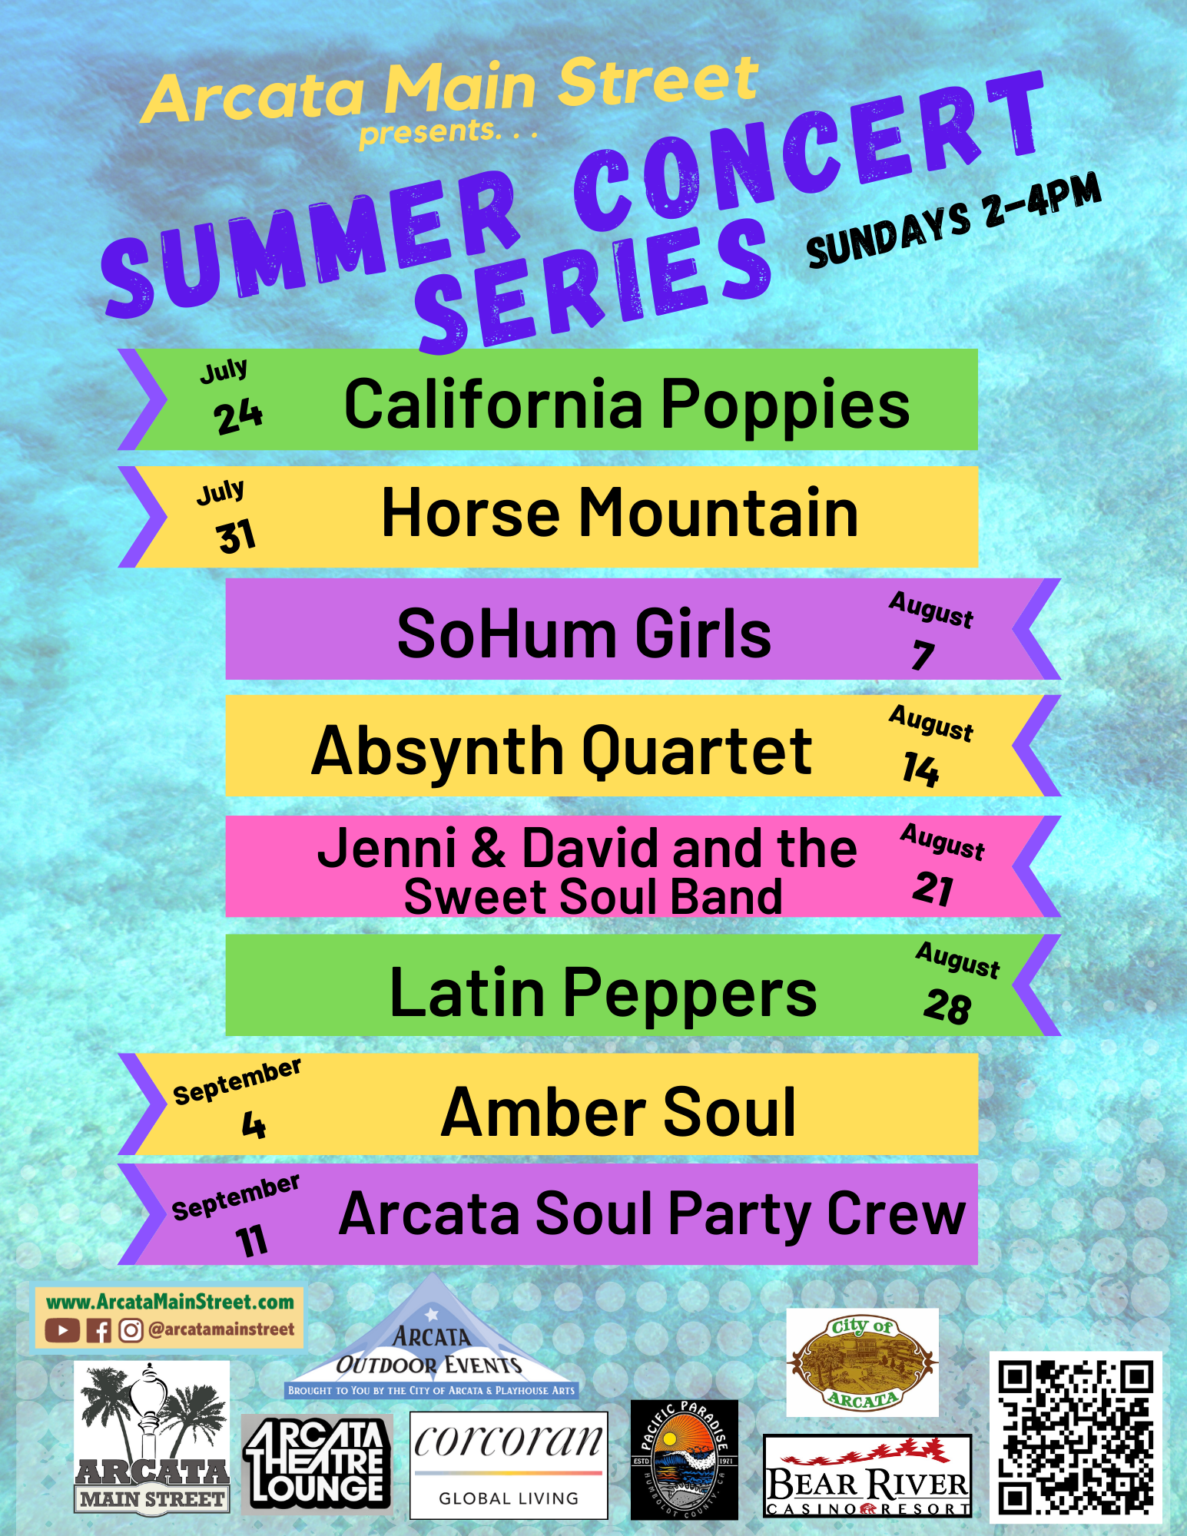 Summer Concert Series Visit Arcata!